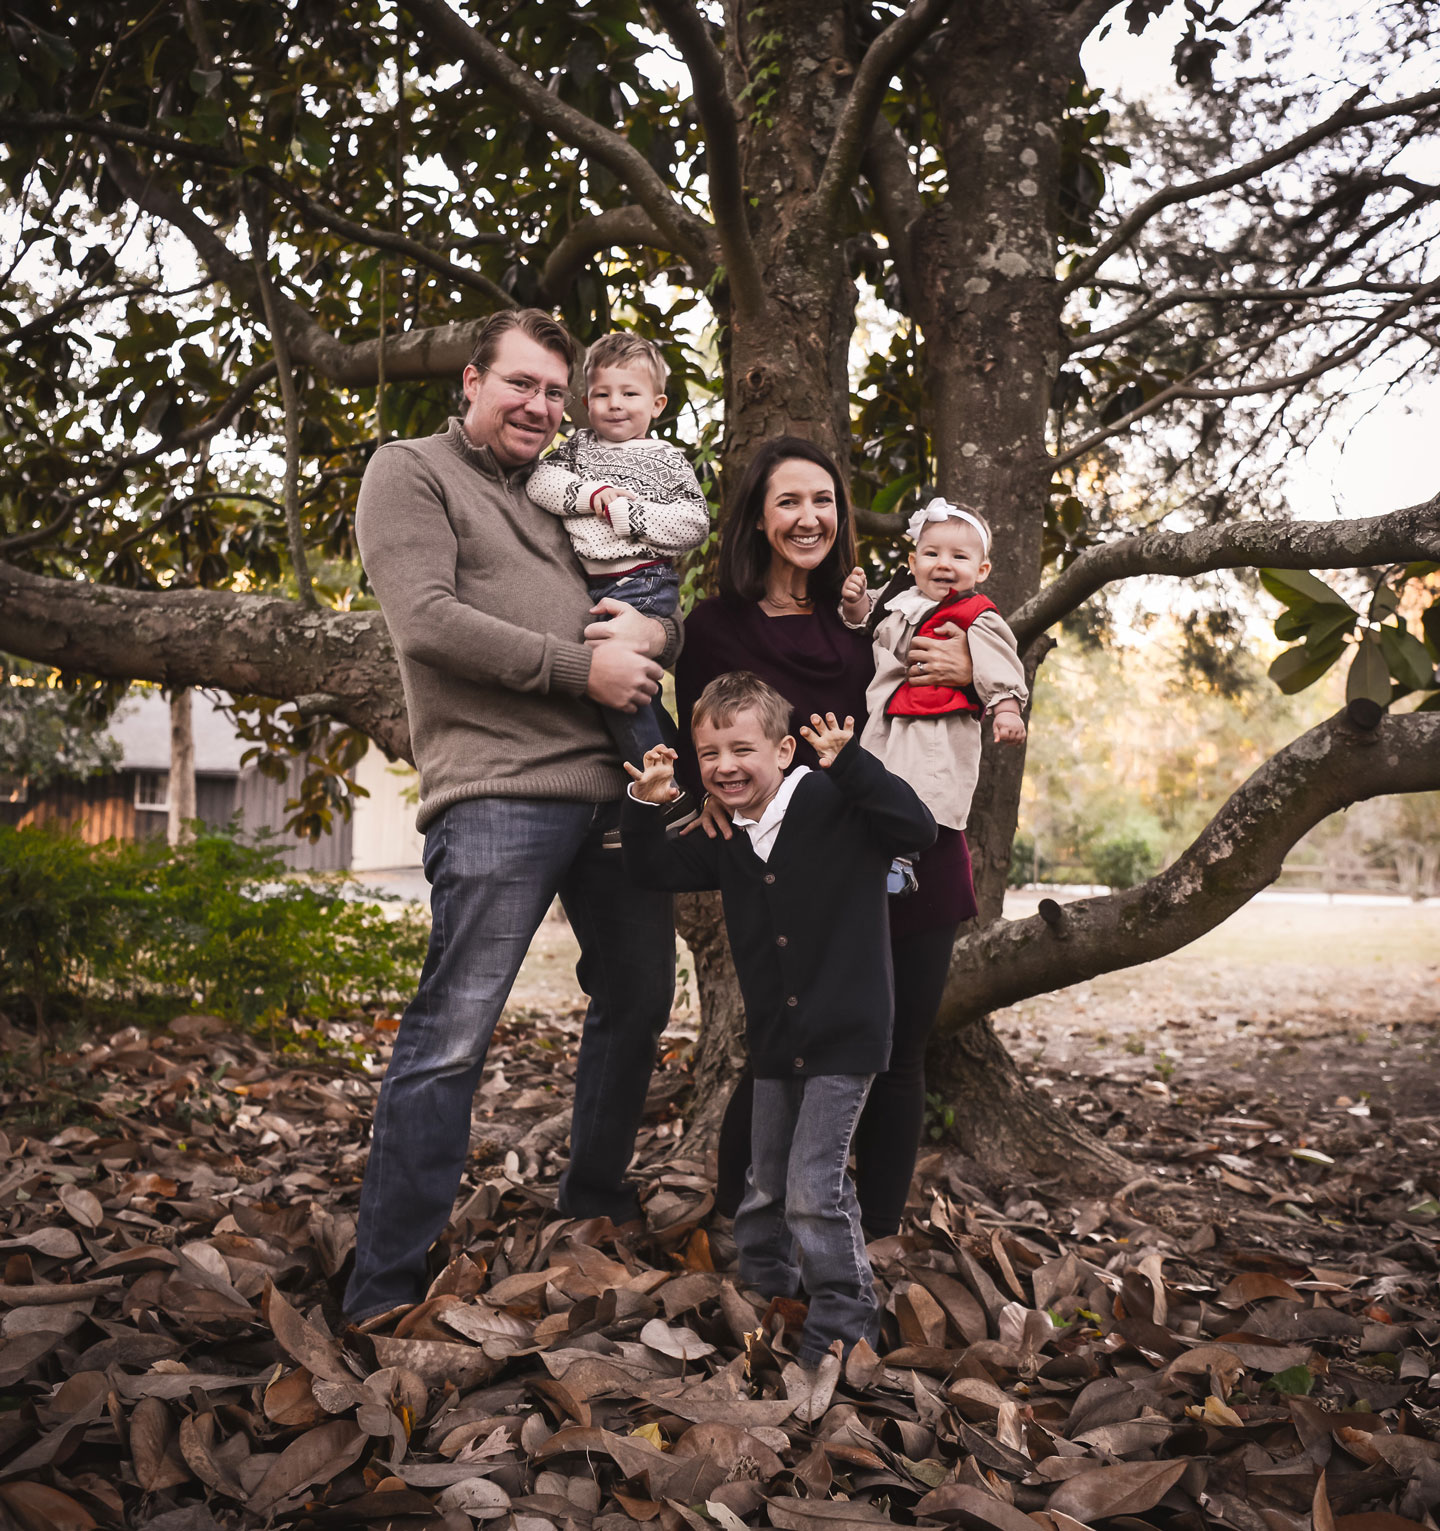 Ryan Swanson and family in Atlanta, Ga.